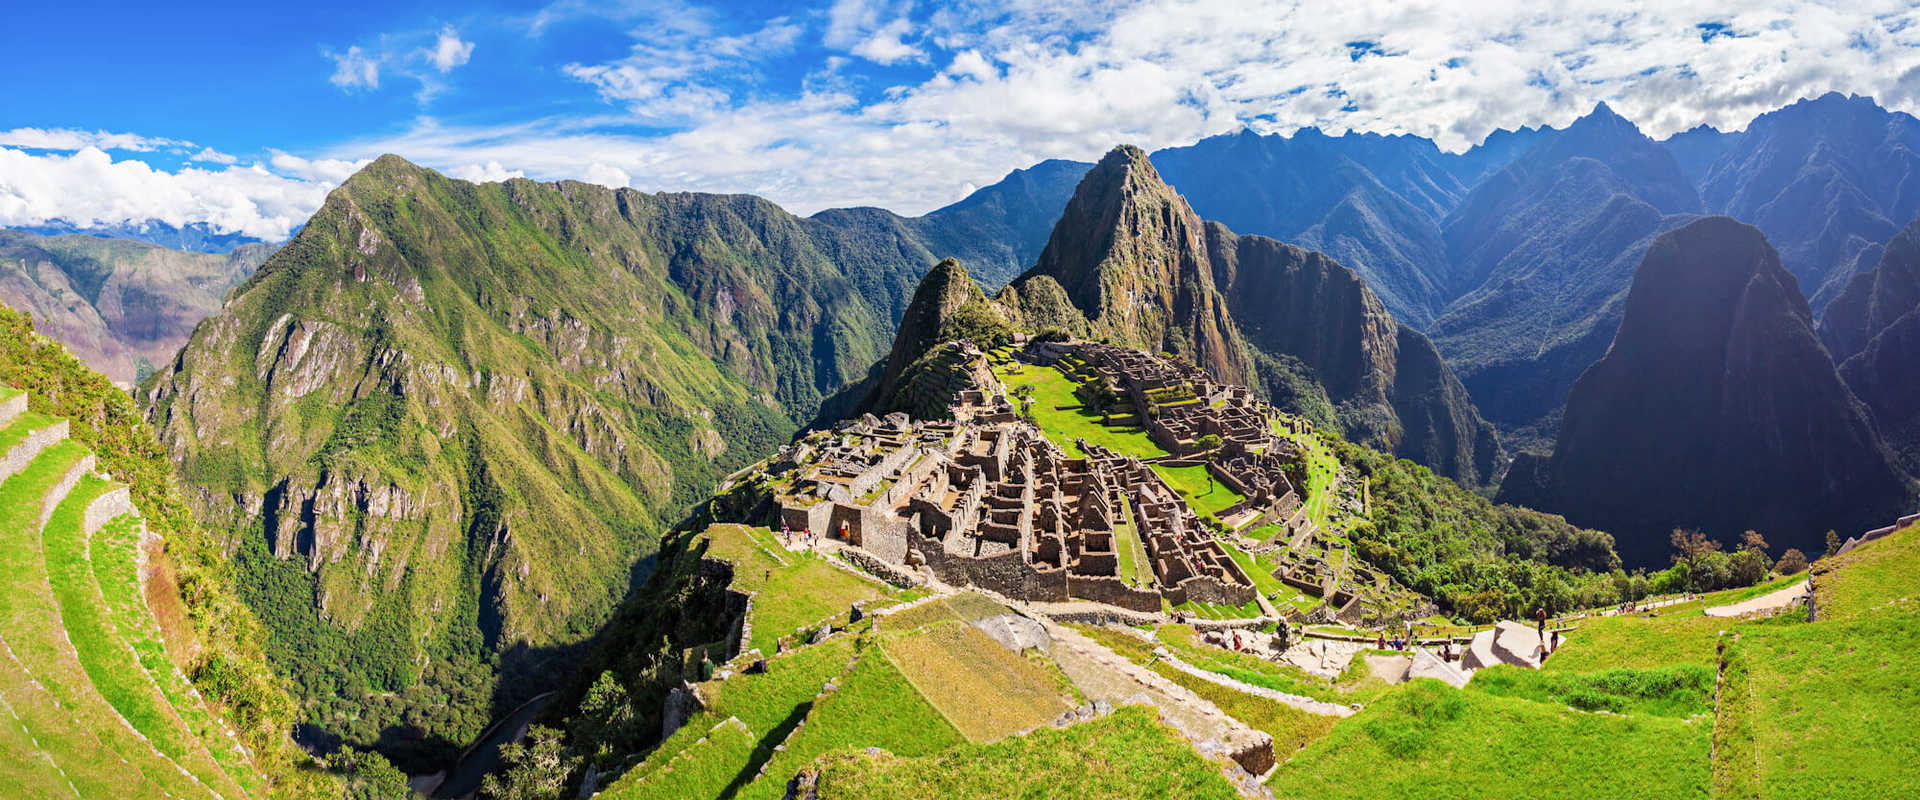 Machu Picchu wide angle